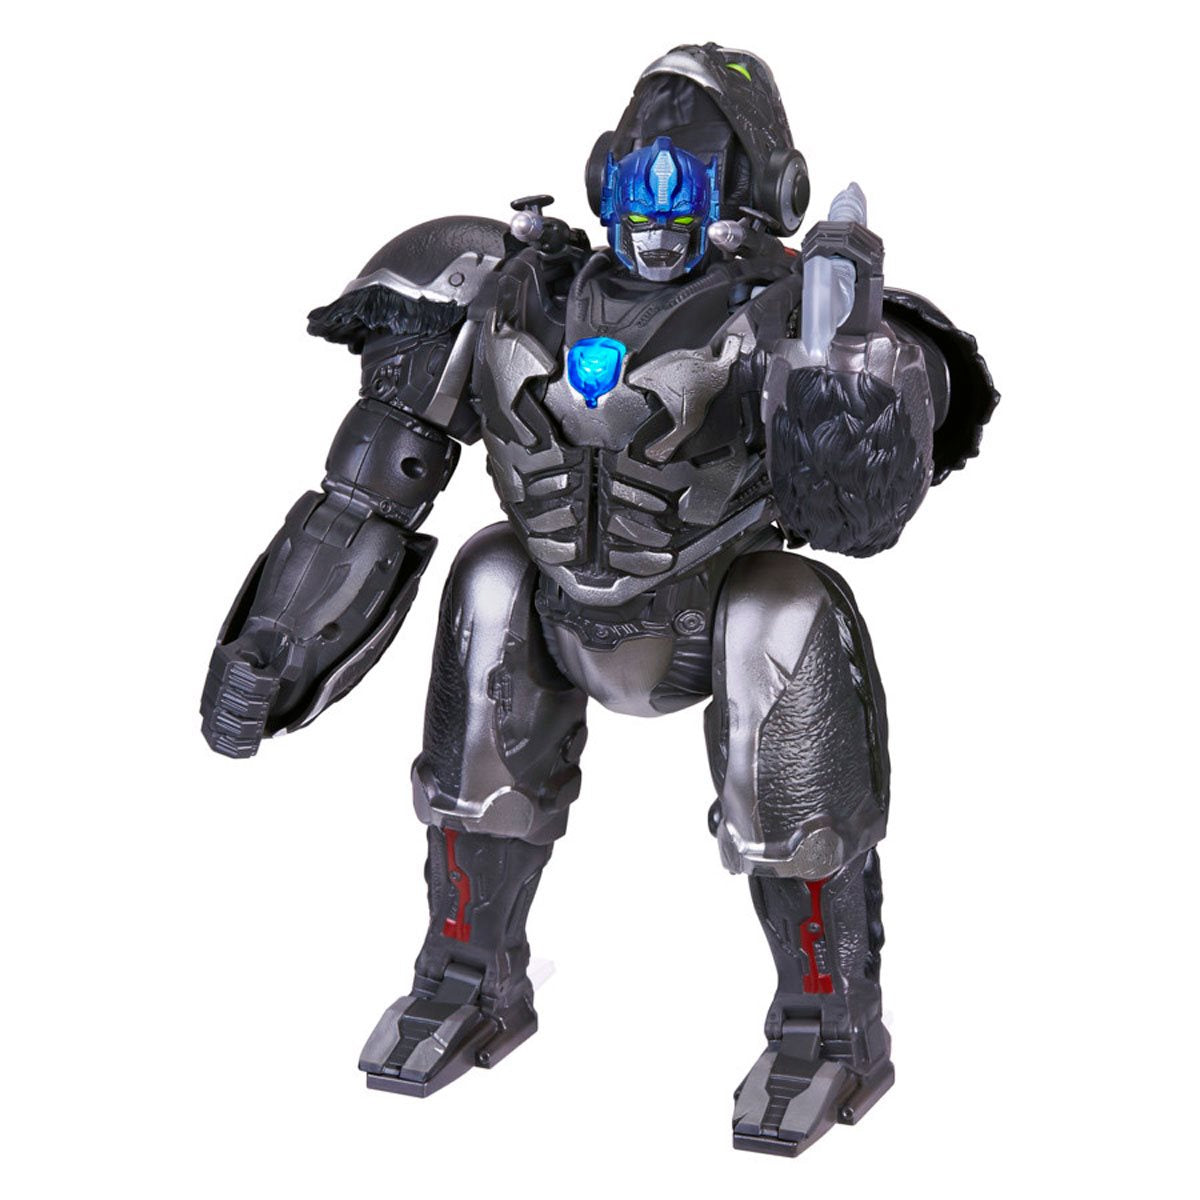 Command & Convert Animatronic Optimus Primal Action Figure Toy - heretoserveyou